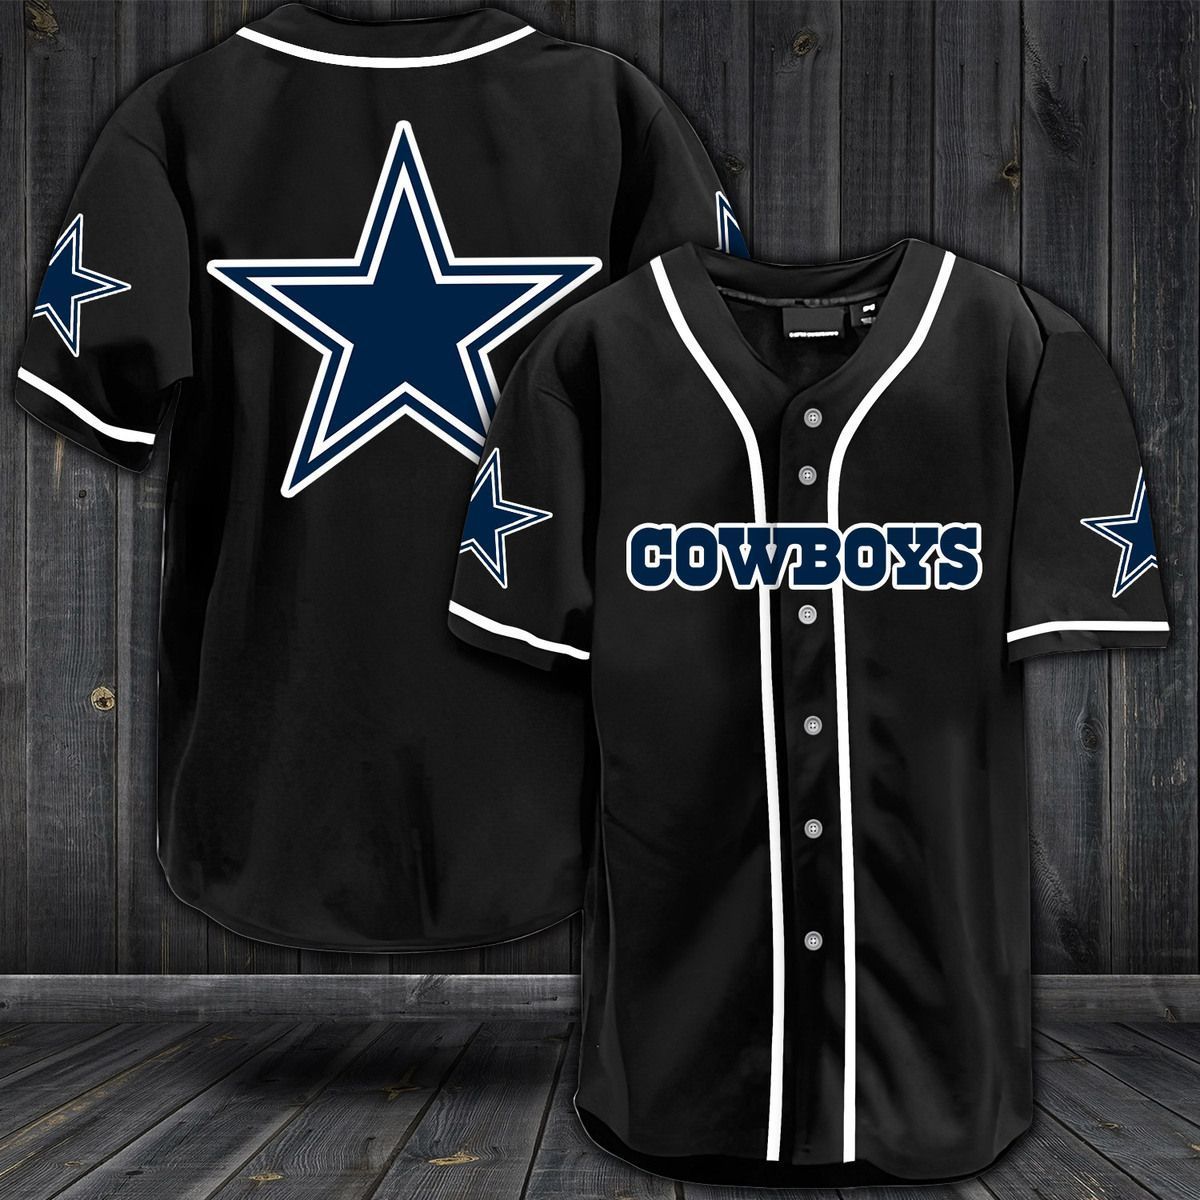 NFL Dallas Cowboys baseball jersey shirt – Saleoff 251221